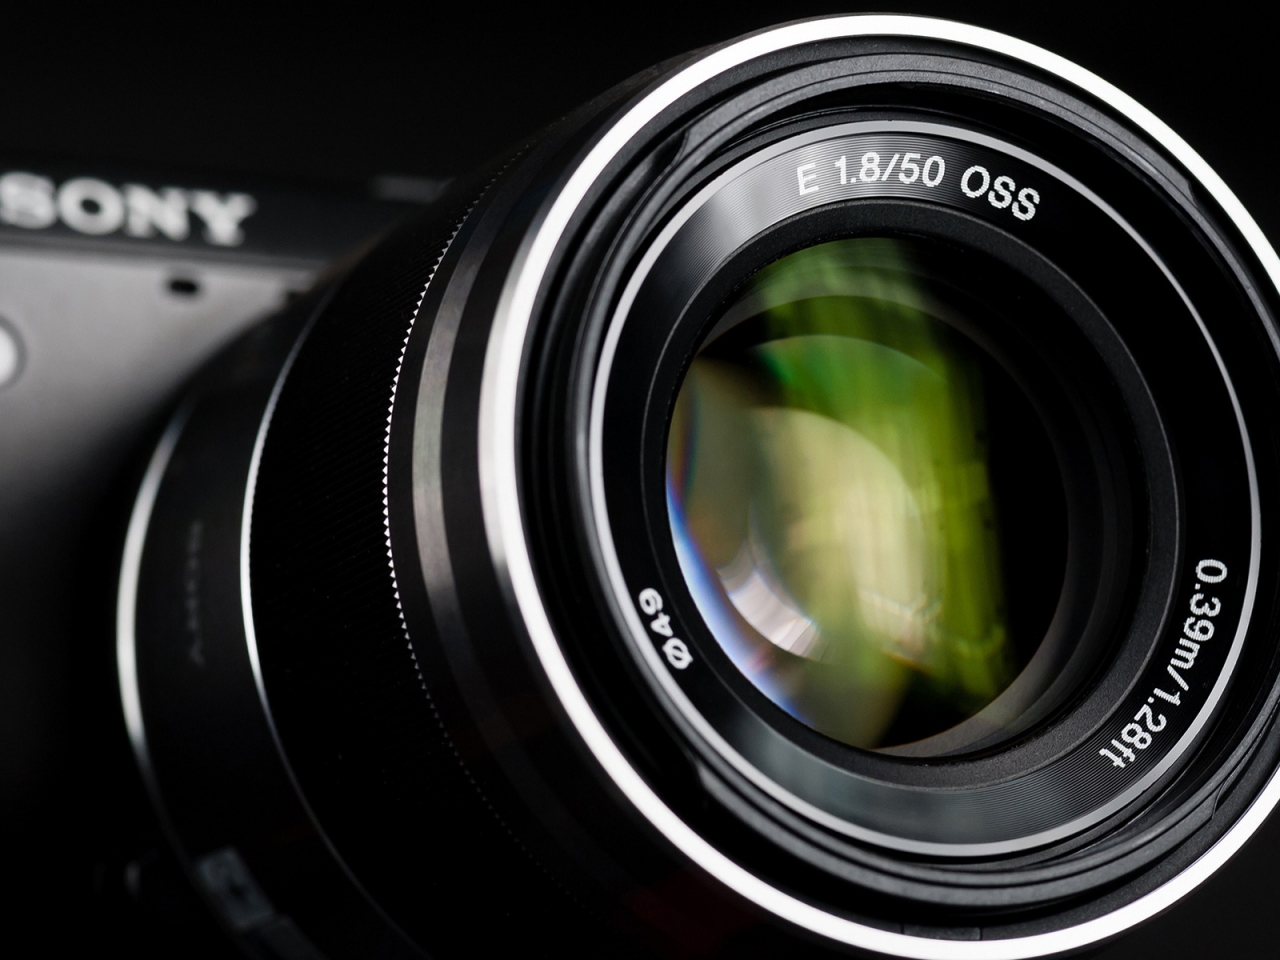 Sony Camera Lens for 1280 x 960 resolution